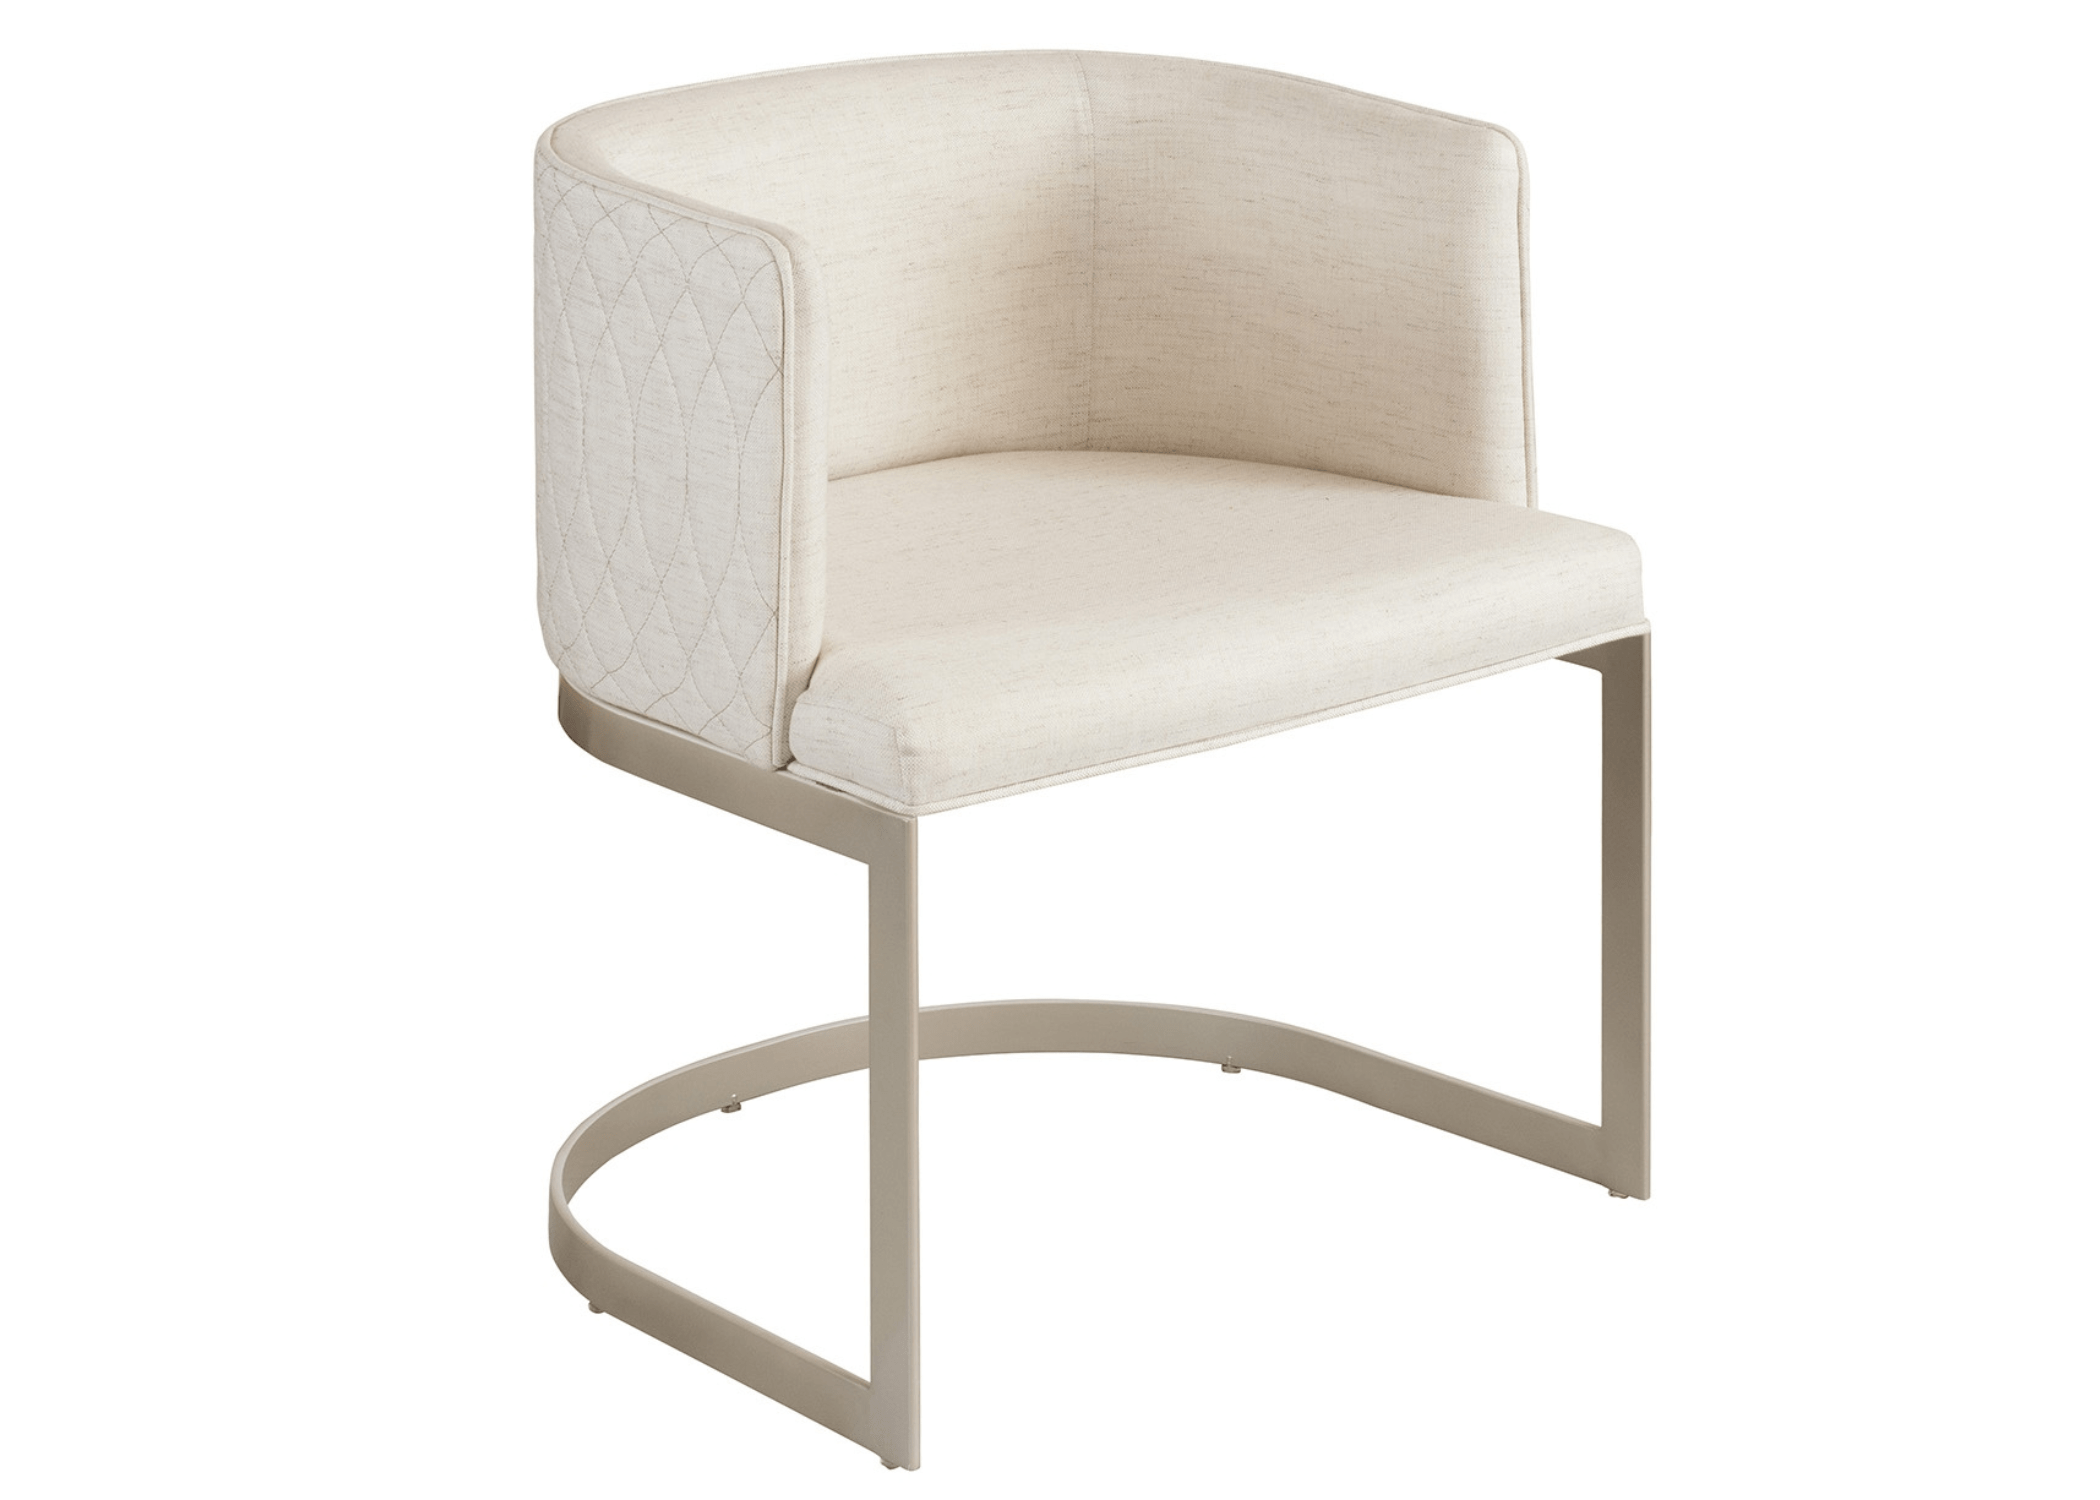 Acabamento matelassê: textura e estilo na Cadeira Naya Matelassê.